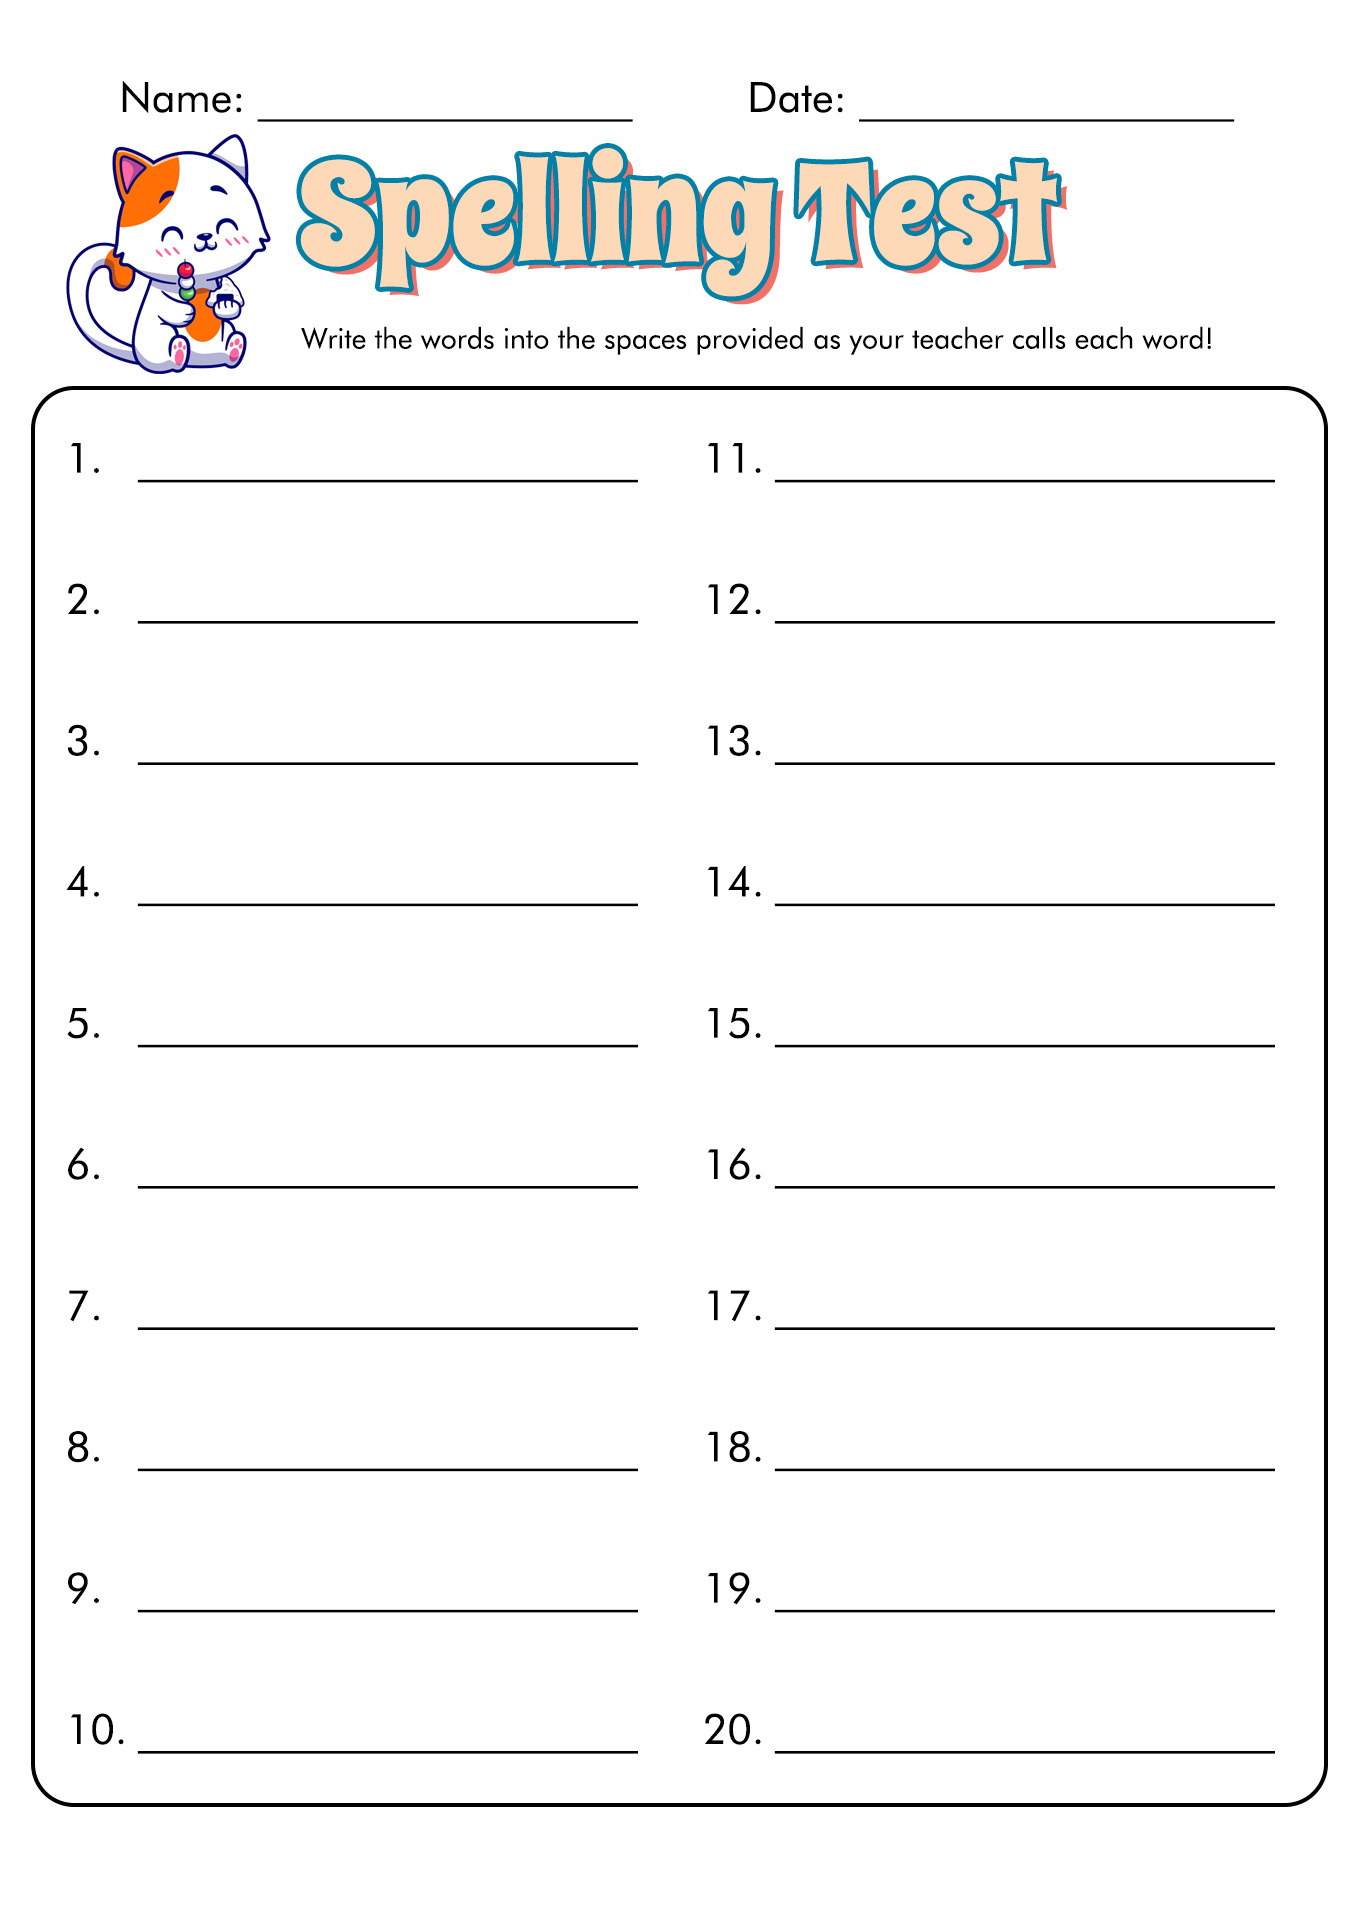 Blank Spelling Word Practice Sheets Image